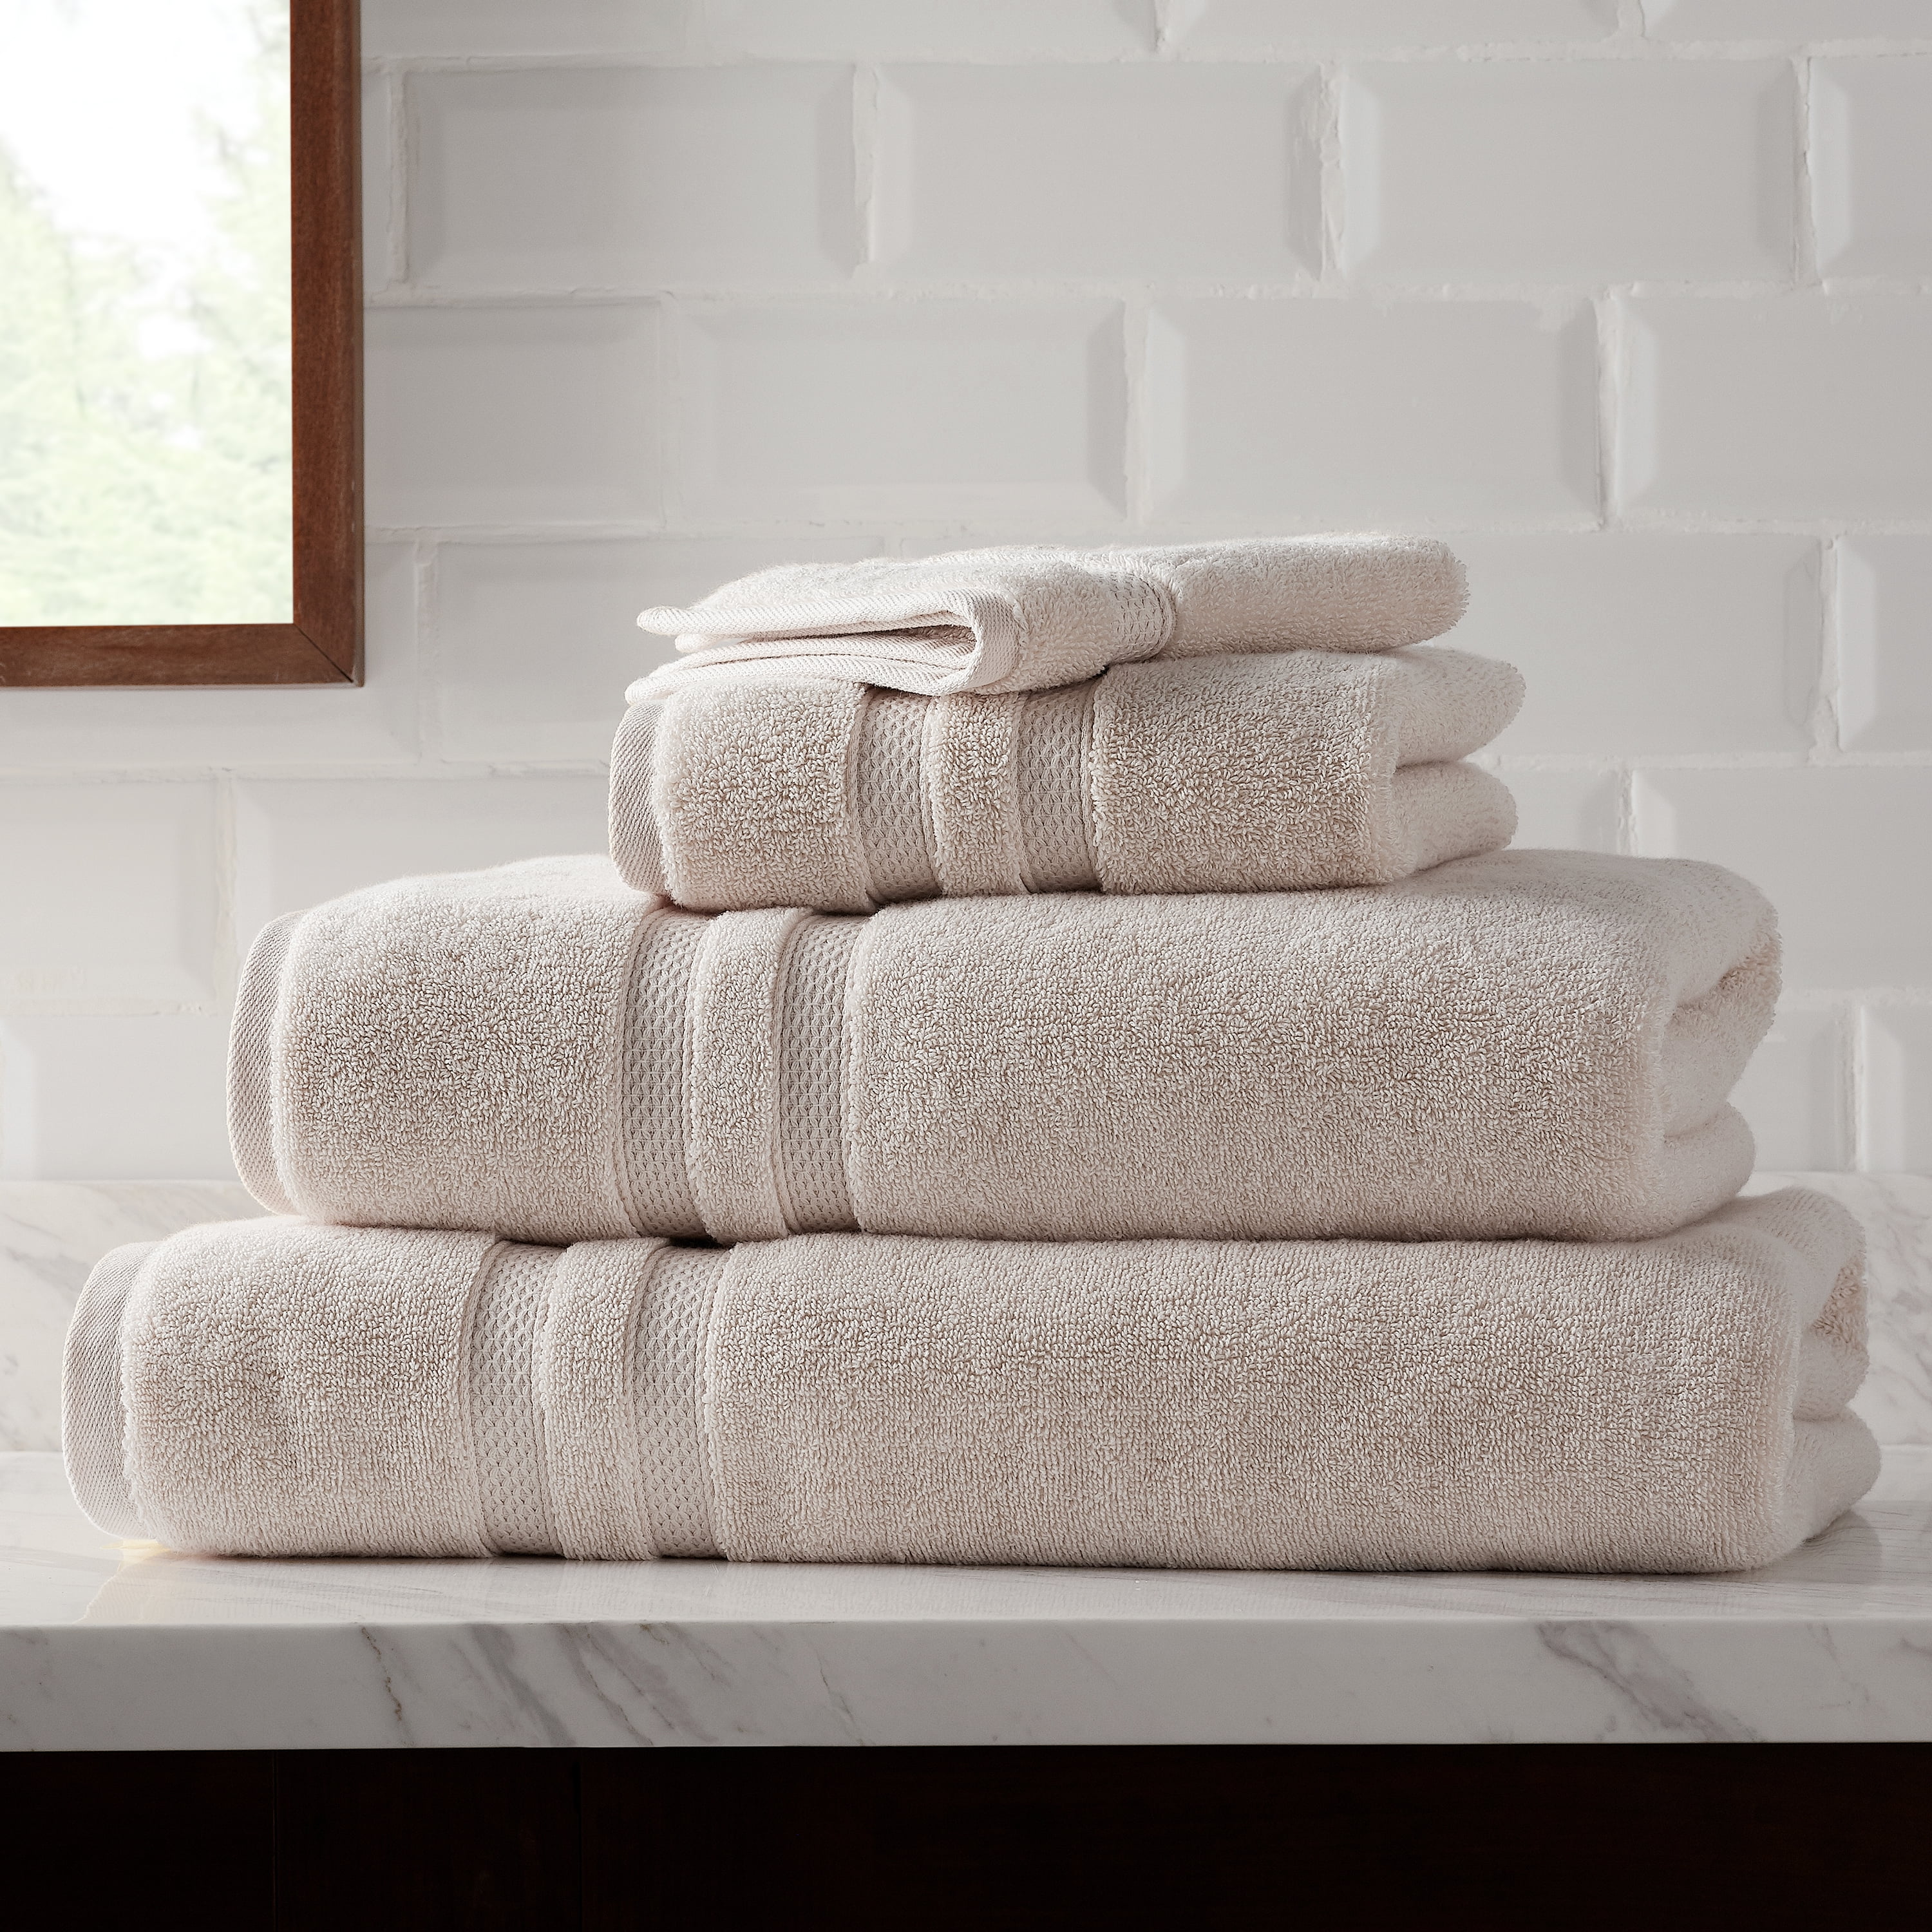 Comfortable Cotton Bath Towel Flower Printing Bathroom Home Hotel Face Towel 